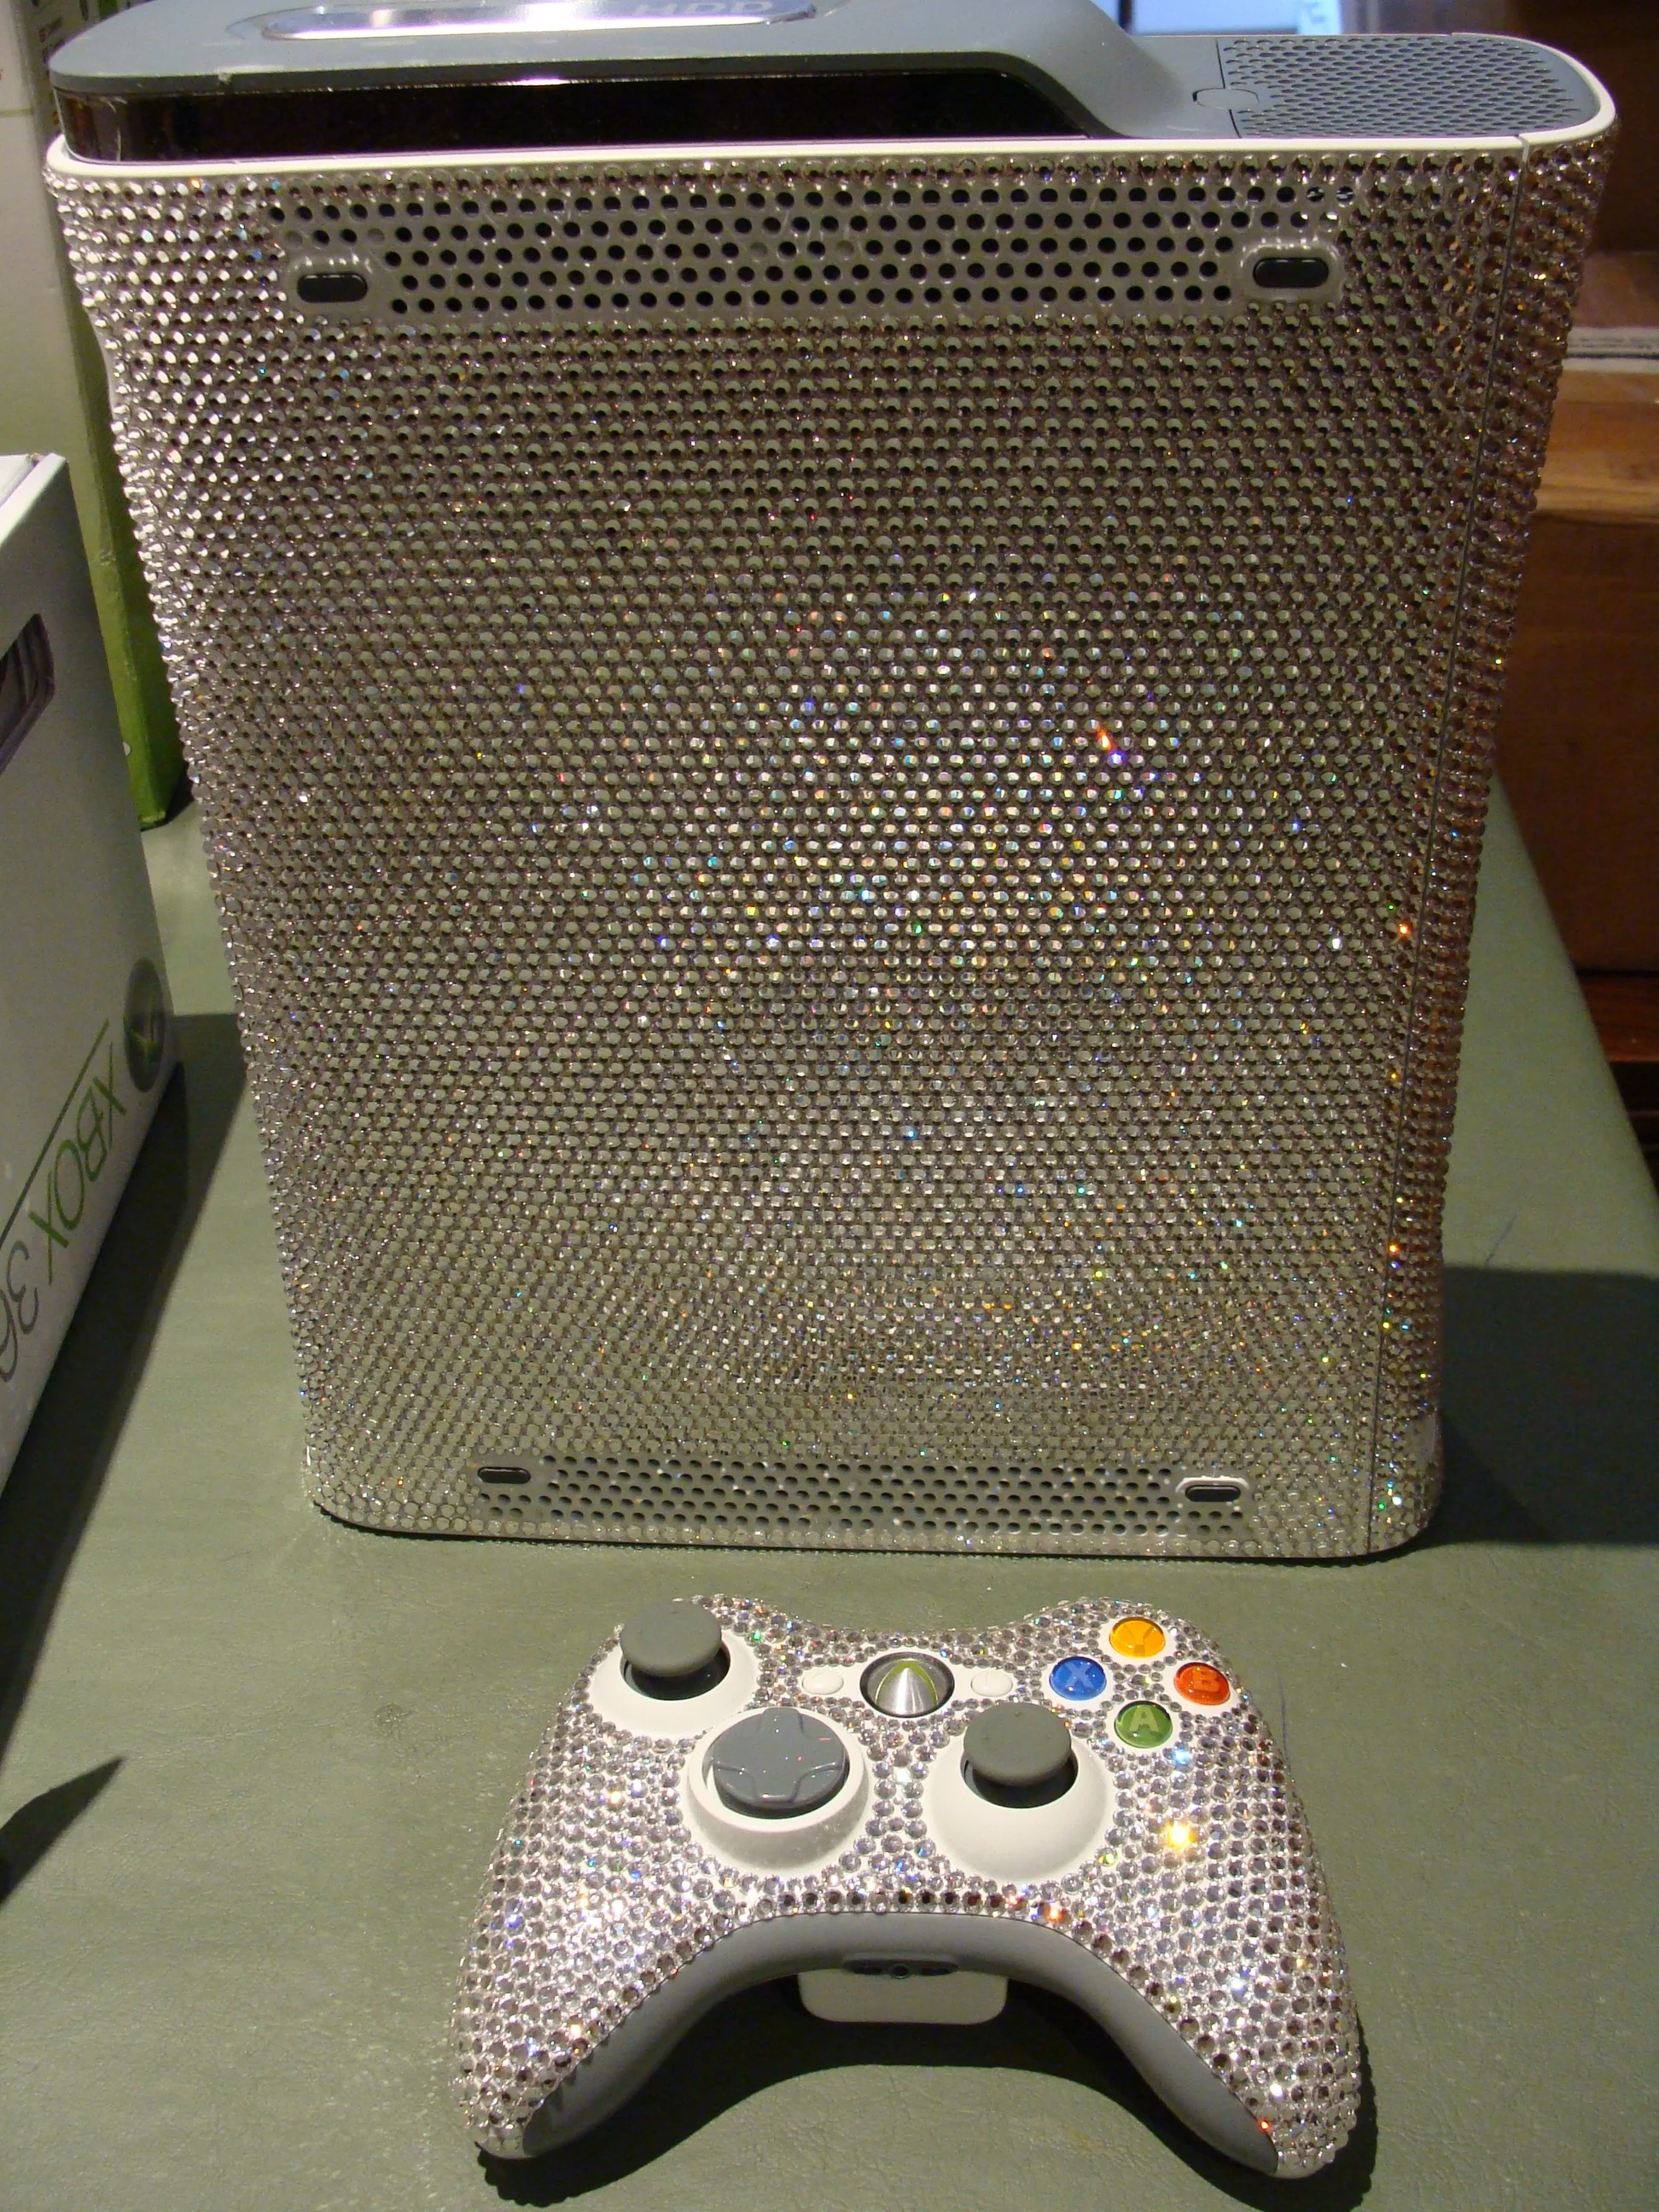  Microsoft Xbox 360 Swarovski Crystal Console